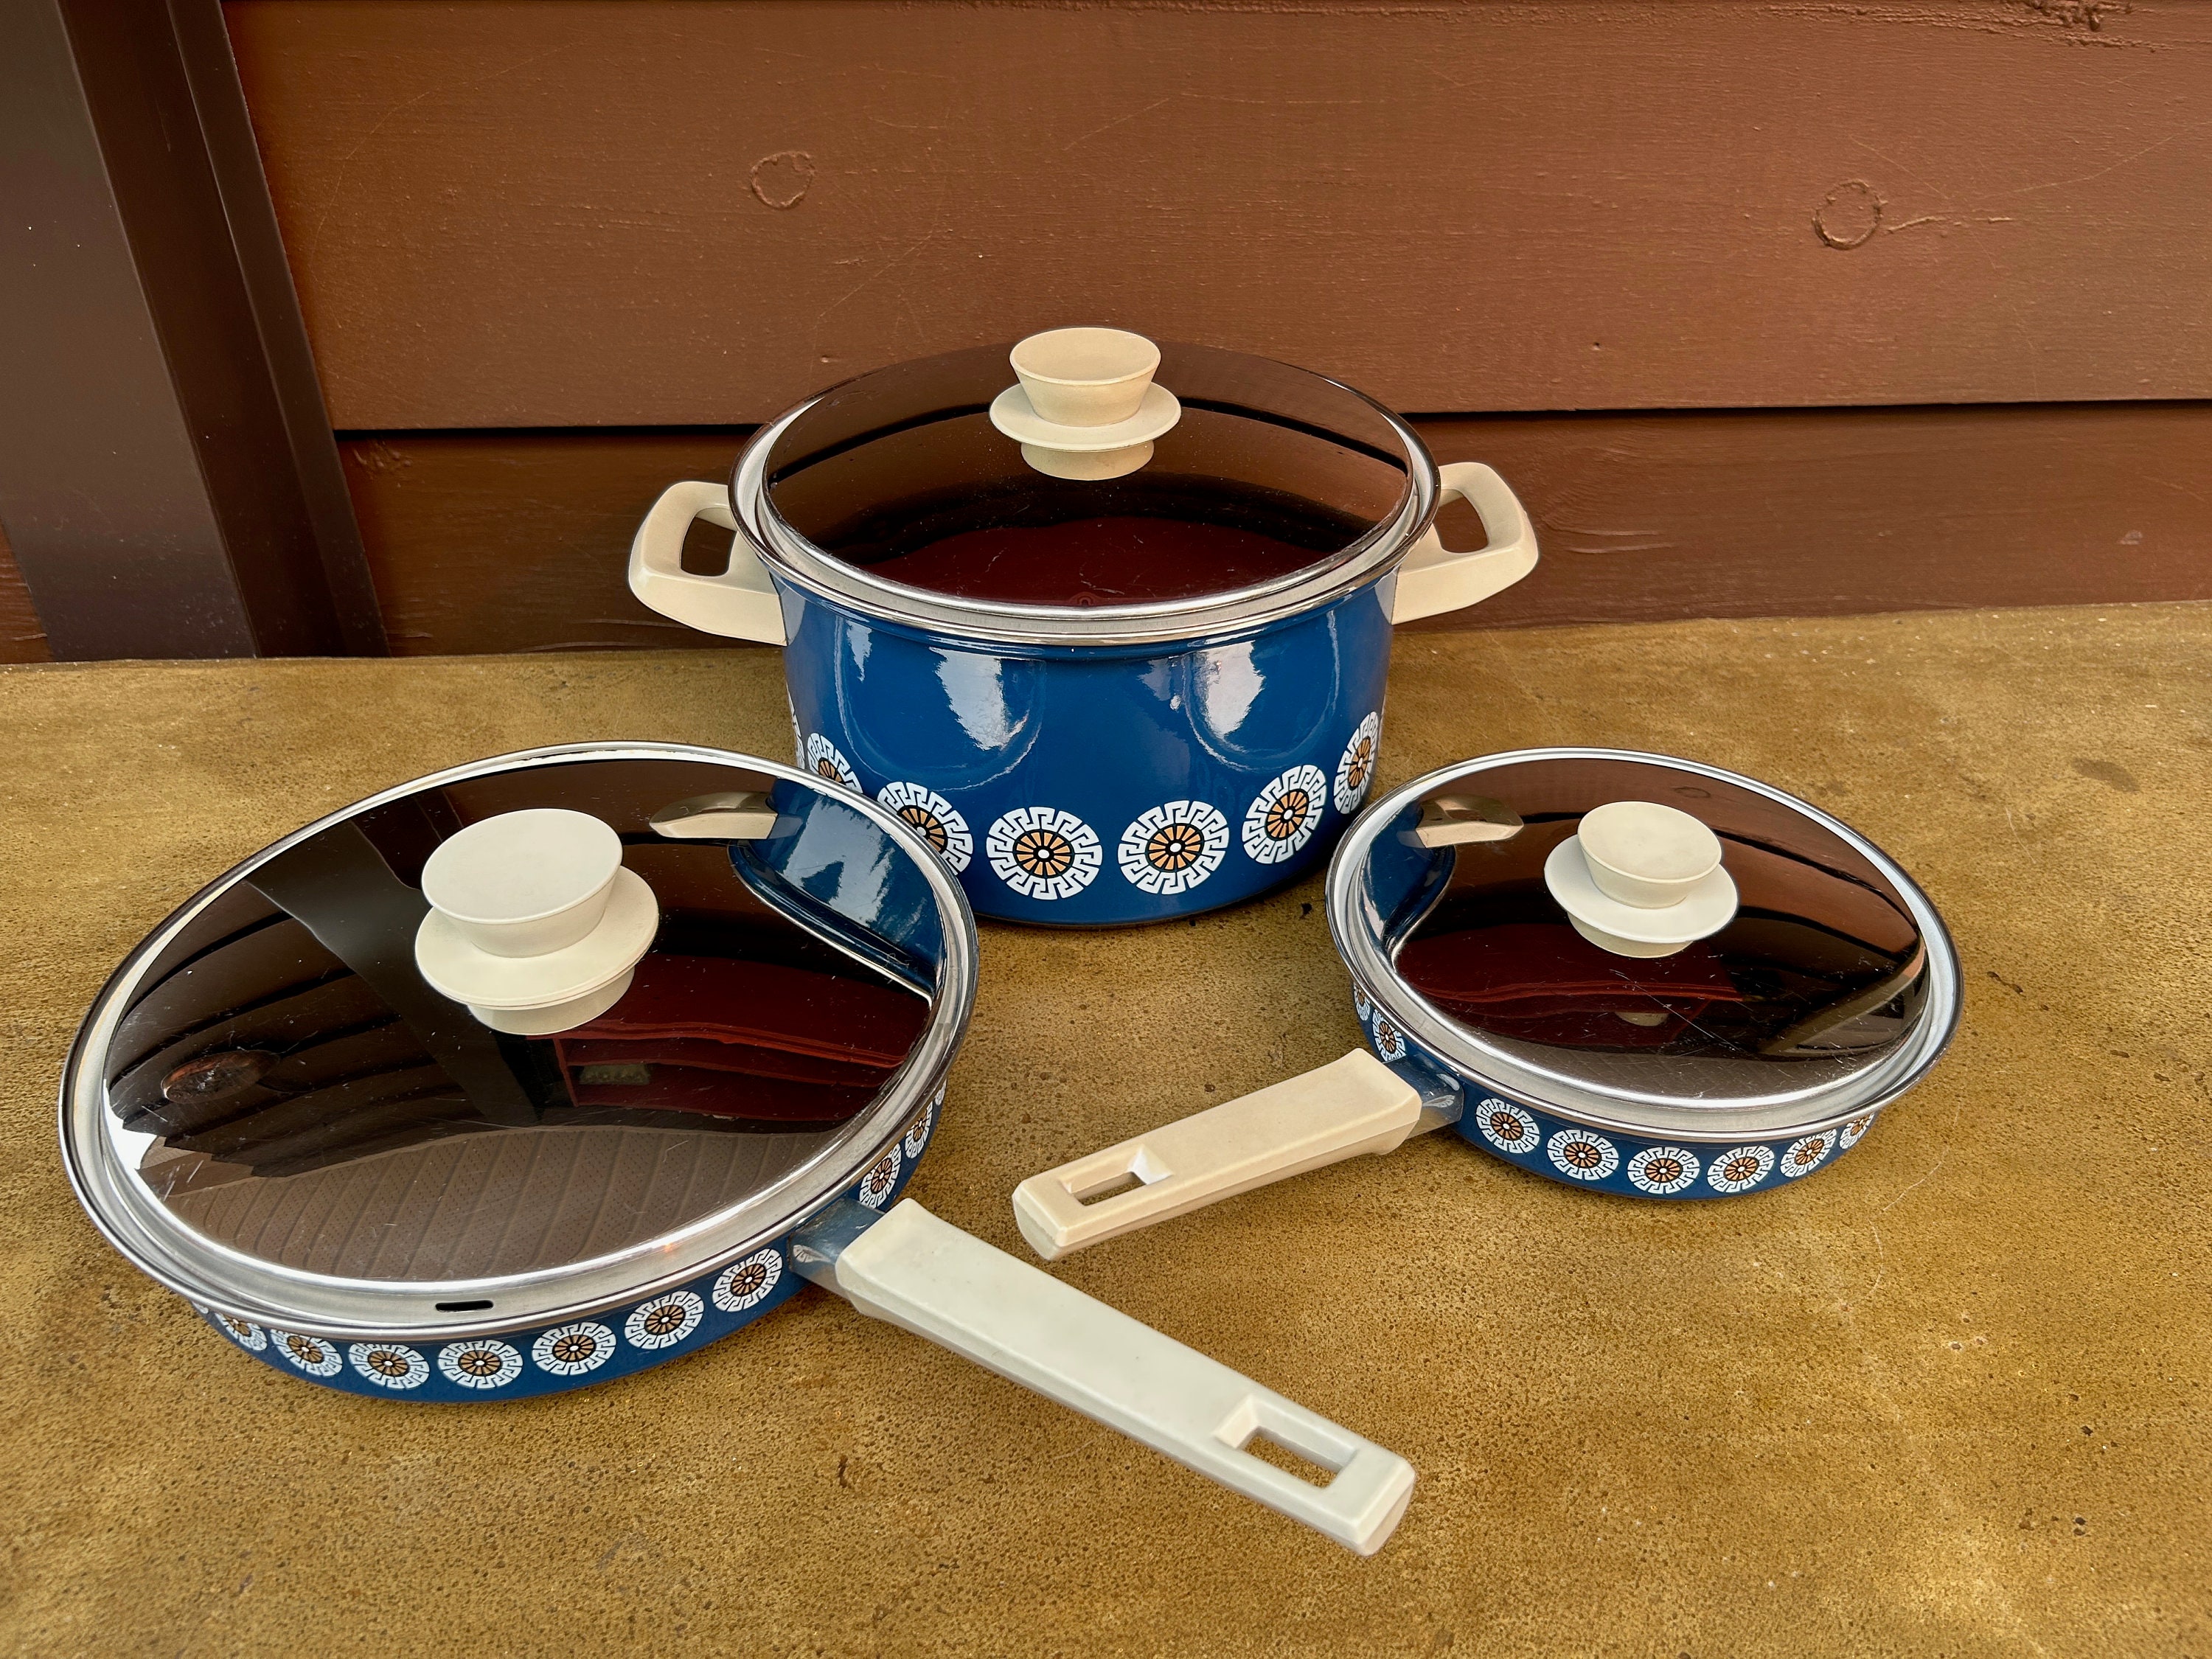 Vintage White & Red Enamel Cooking Pans Set of 3 Camping Rustic Pans